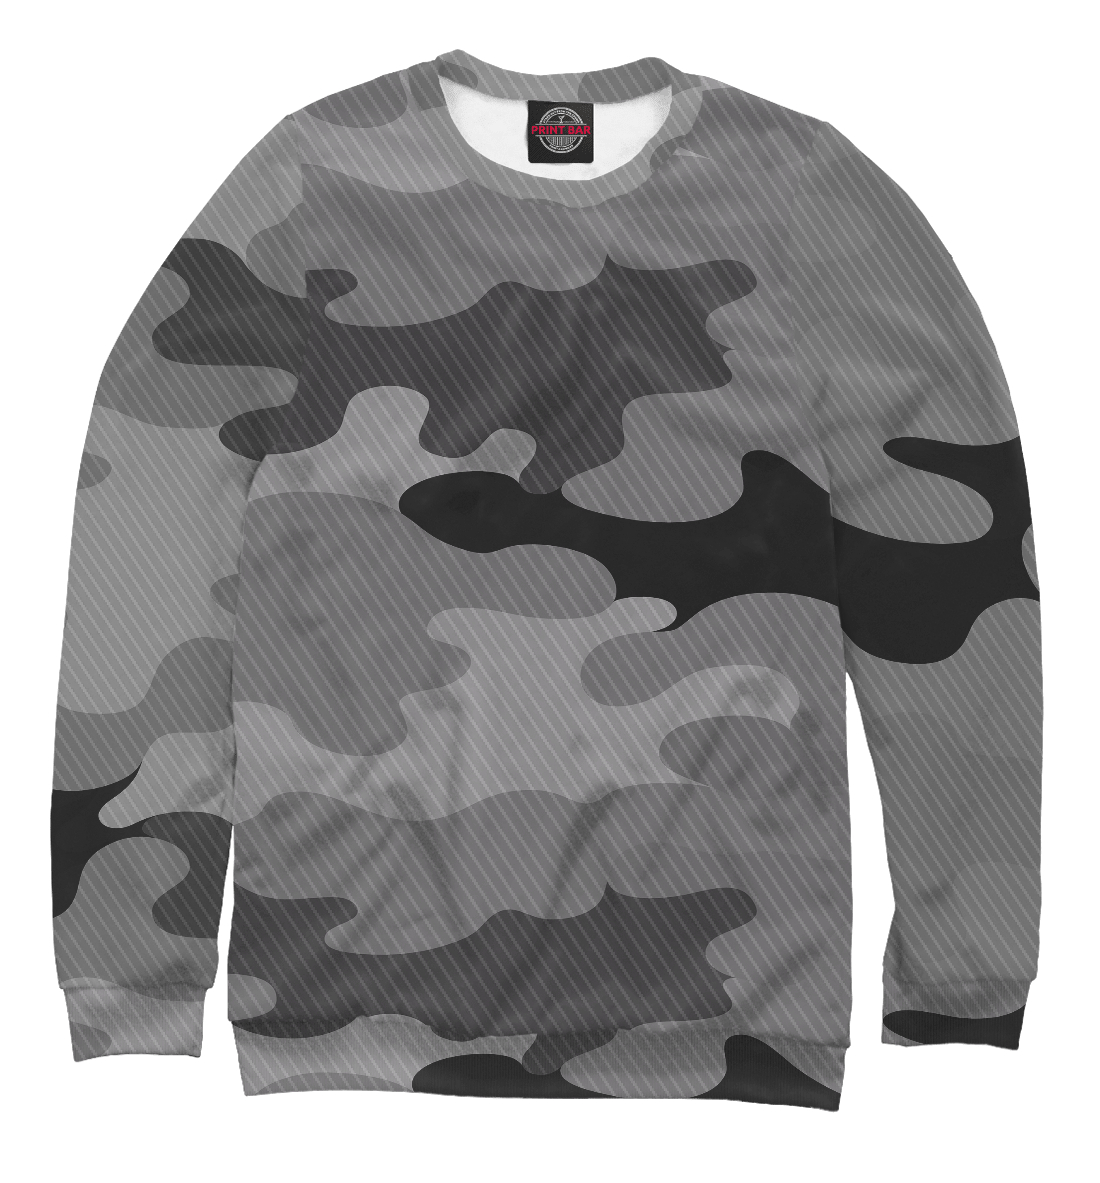 Детский Свитшот camouflage gray для девочек, артикул APD-131416-swi-1mp